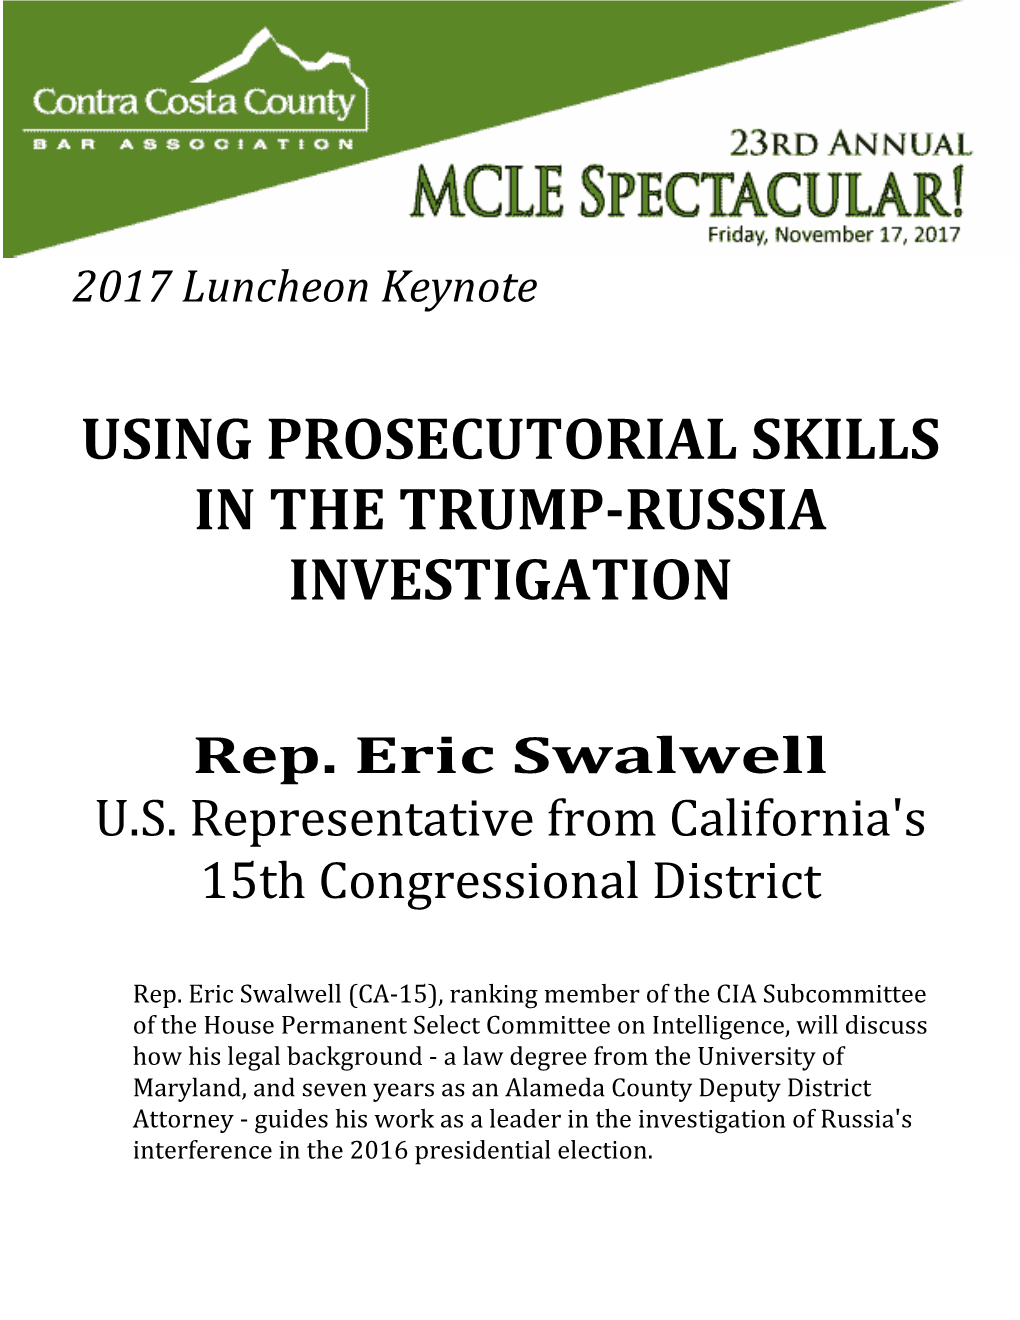 Using Prosecutorial Skills in the Trump-Russia Investigation